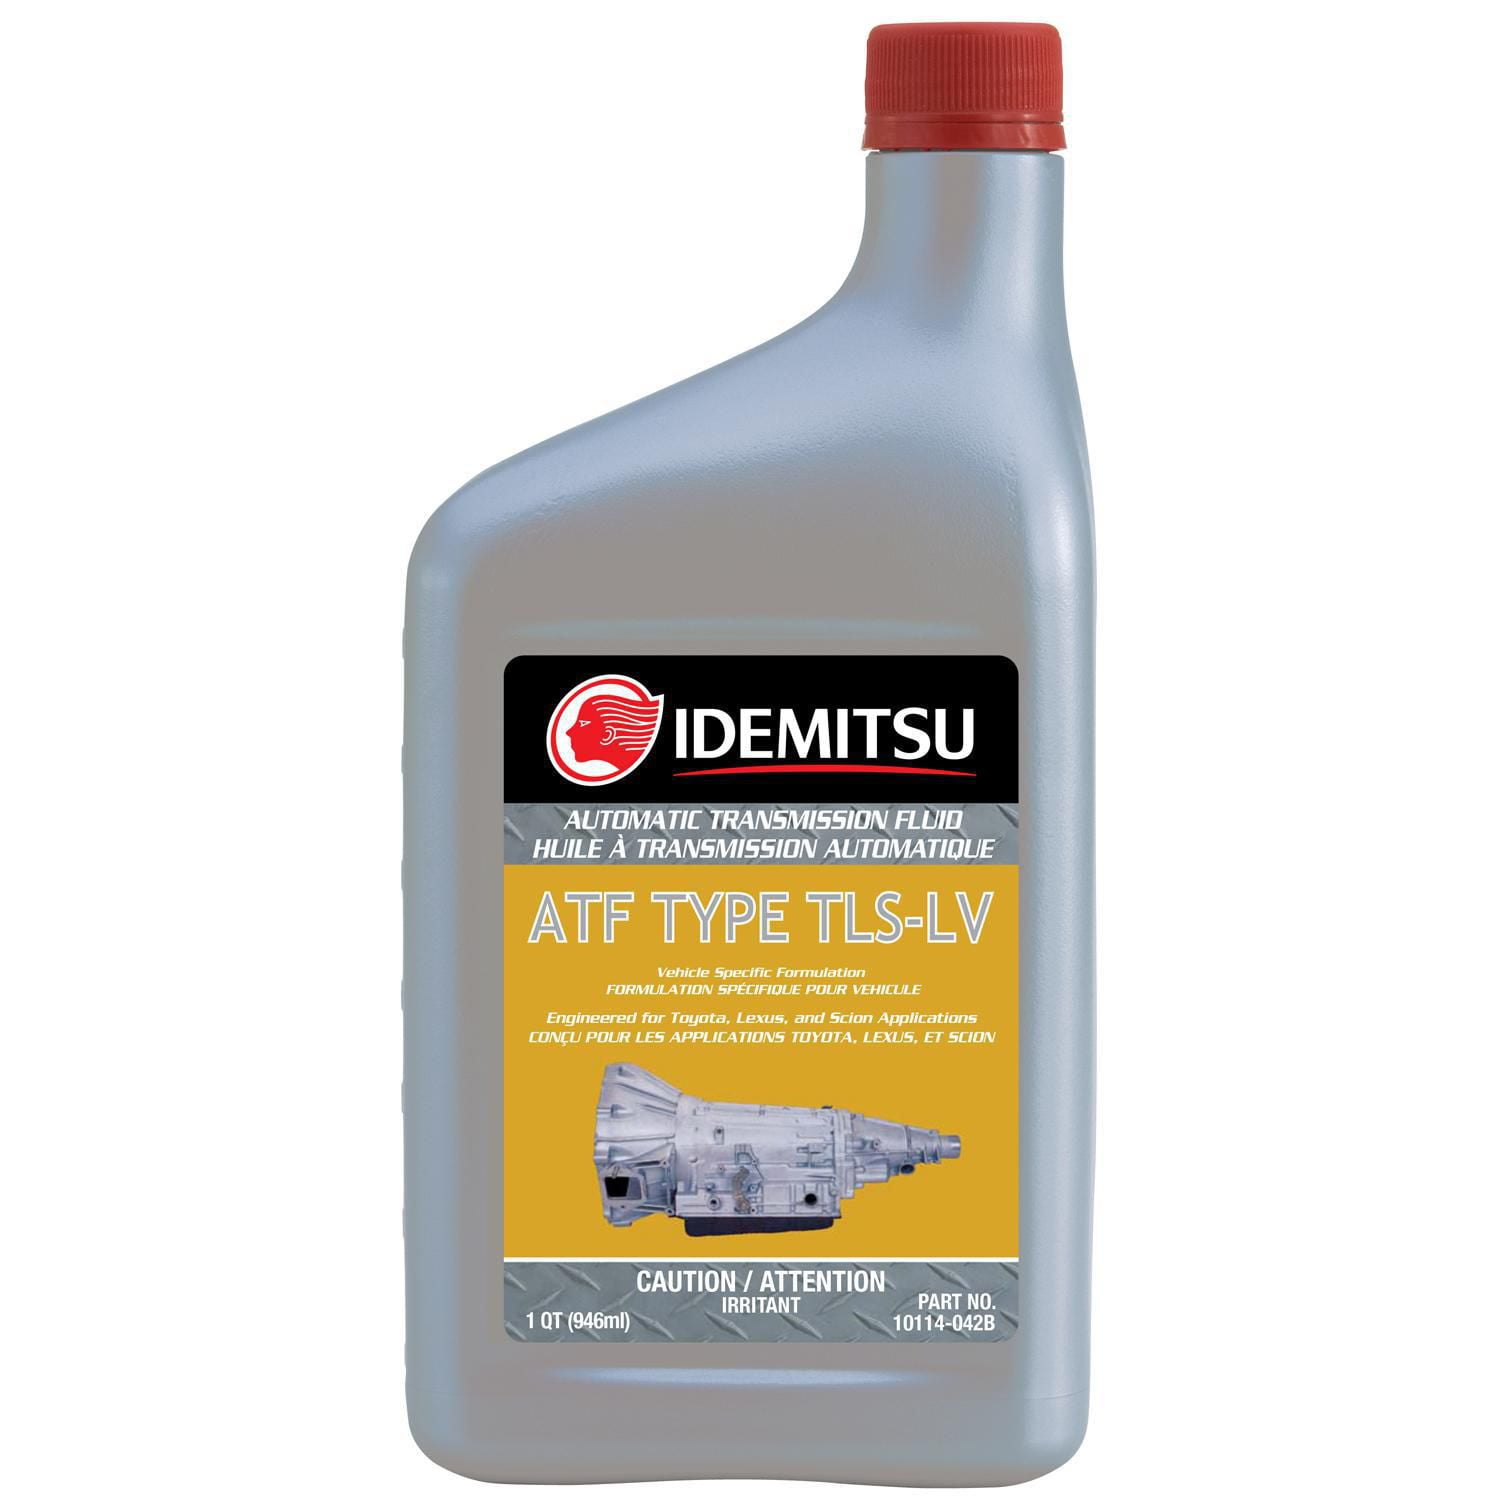 Idemitsu ATF Type TLS-LV Automatic Transmission Fluid for Toyota/Lexus